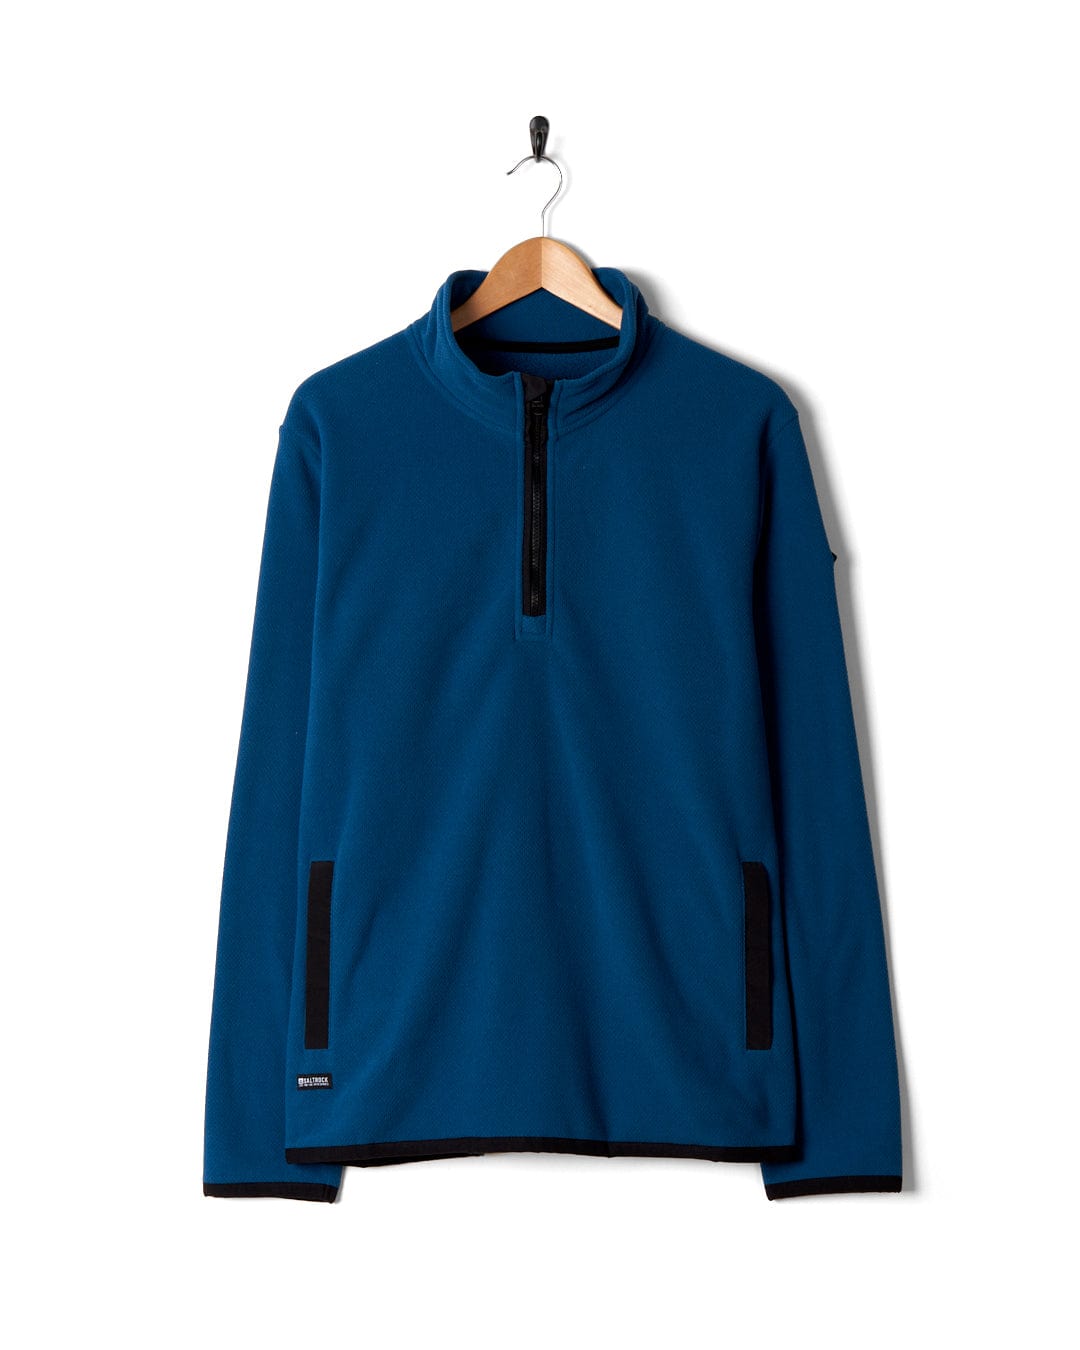 A Saltrock men's blue half-zip sweatshirt made of polyester, hanging on a hanger.